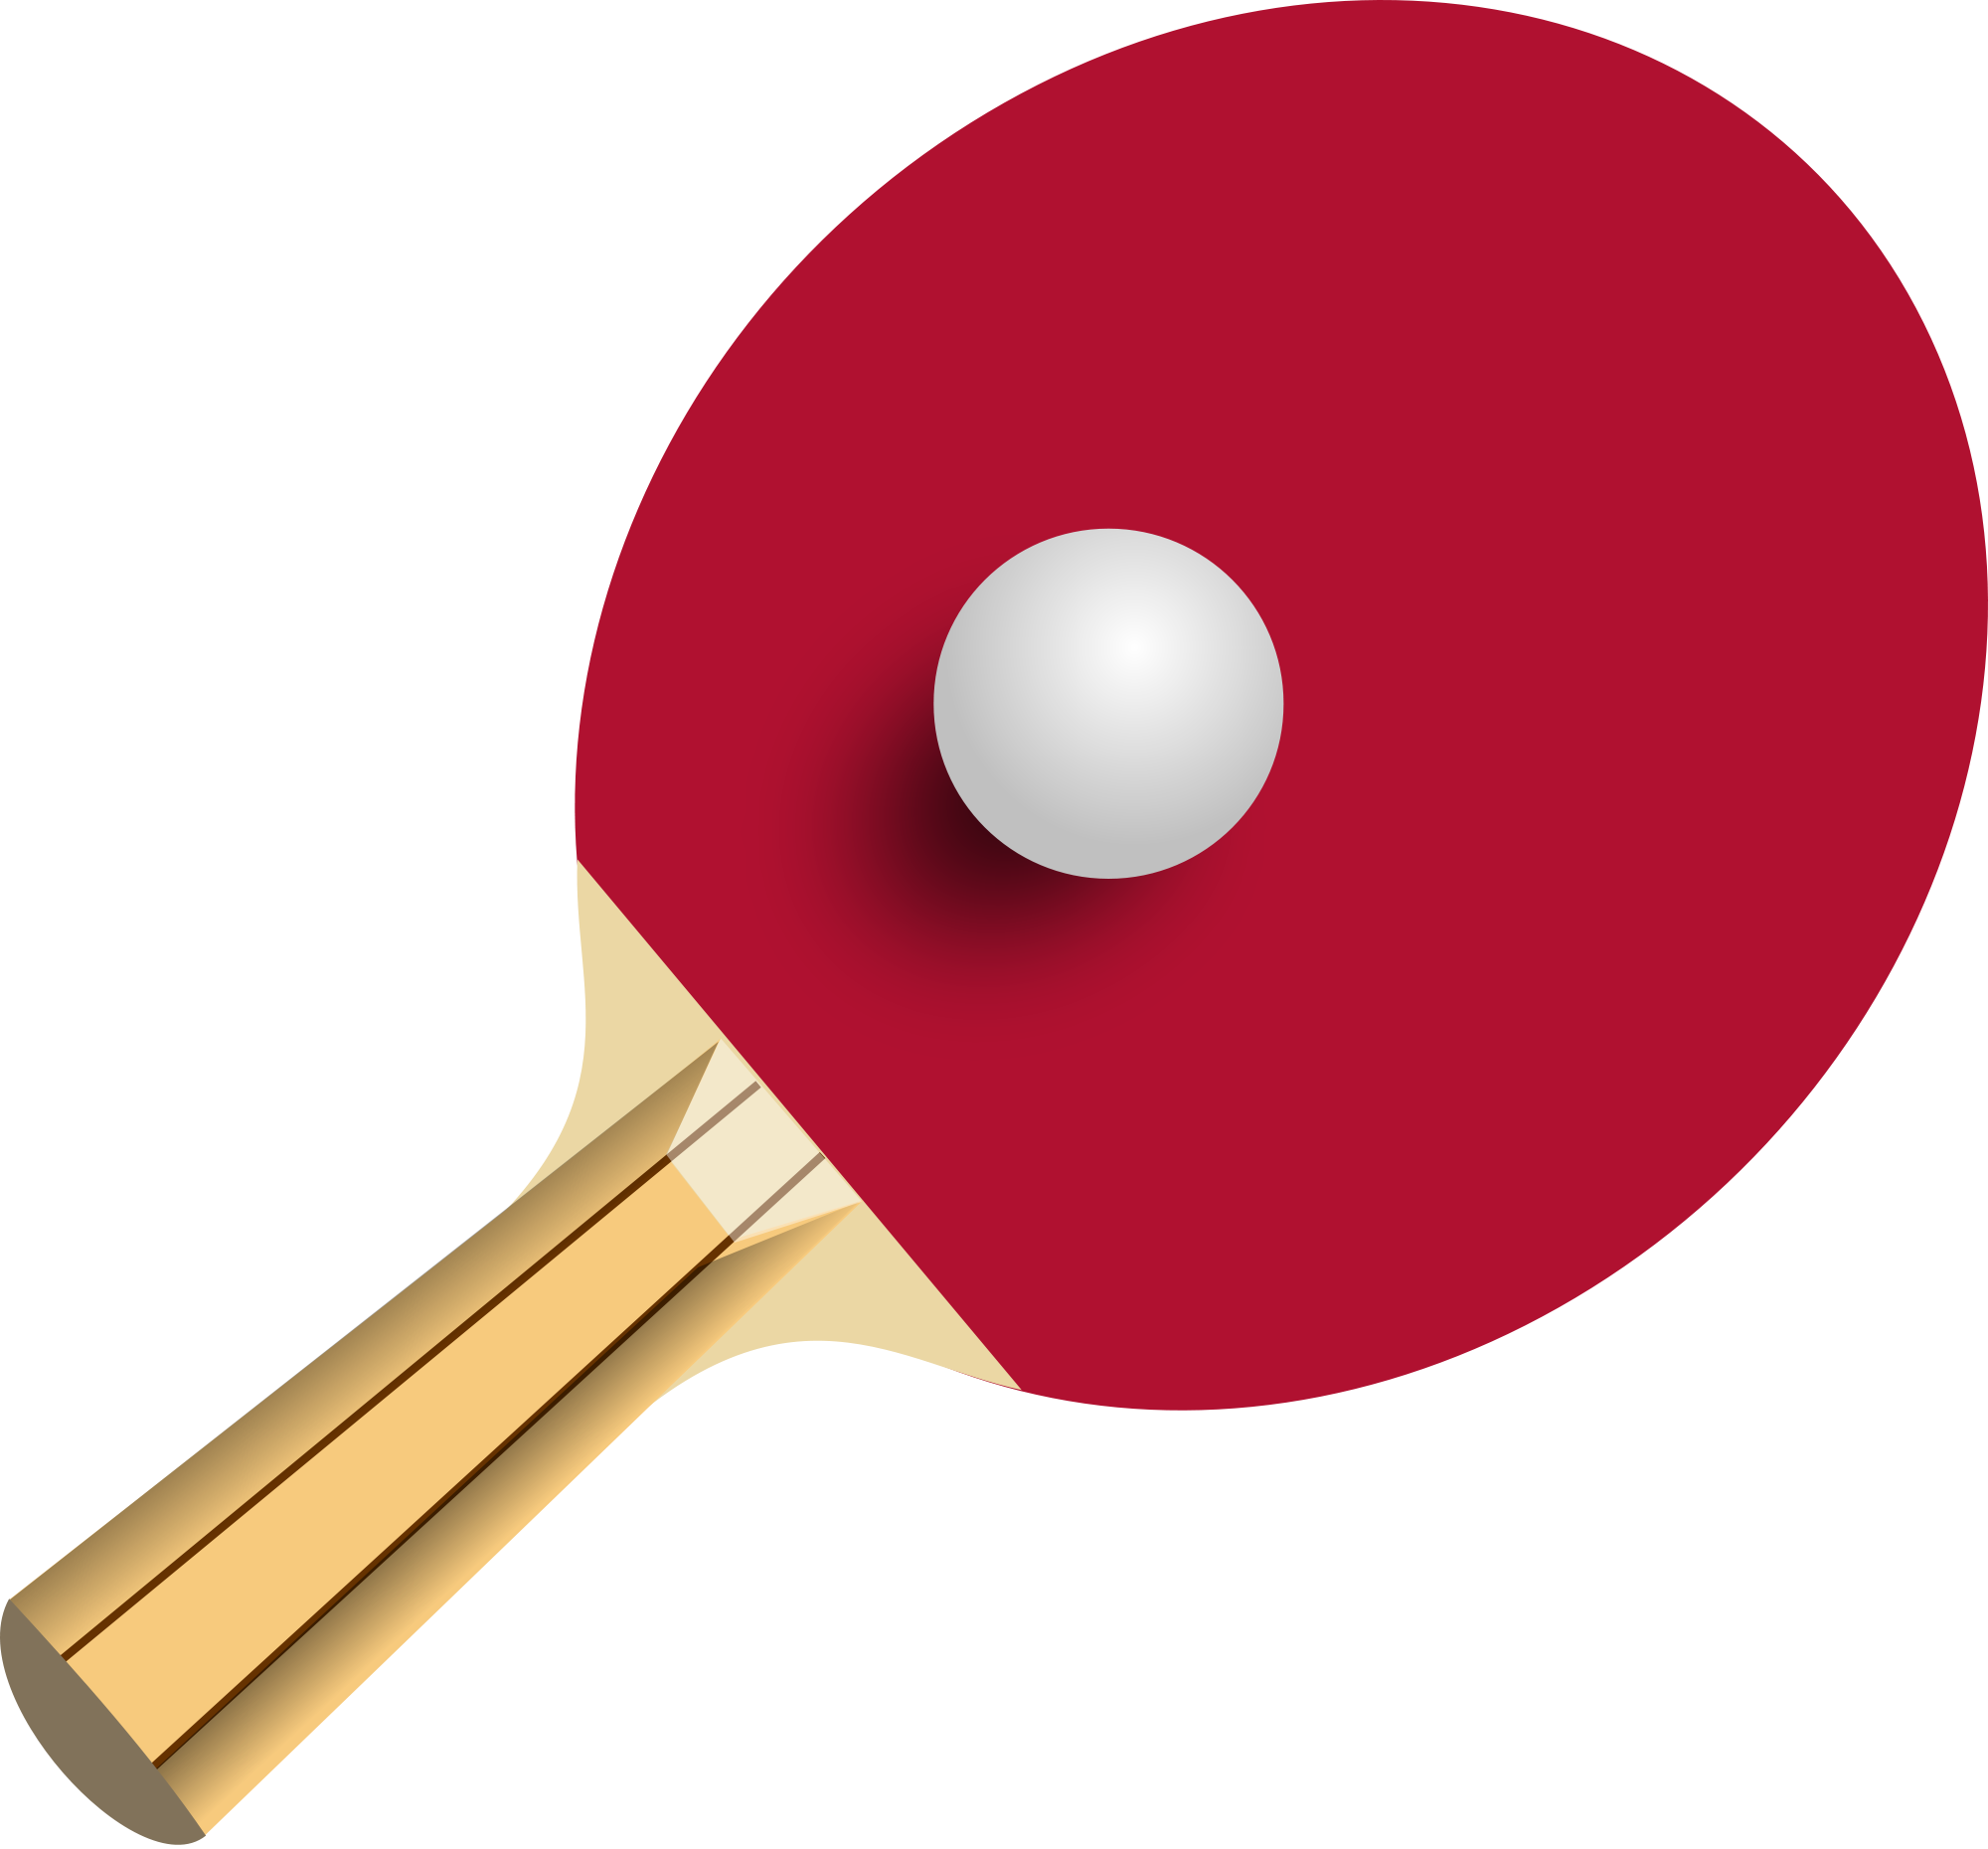 Ping Pong Free Download Png PNG Image